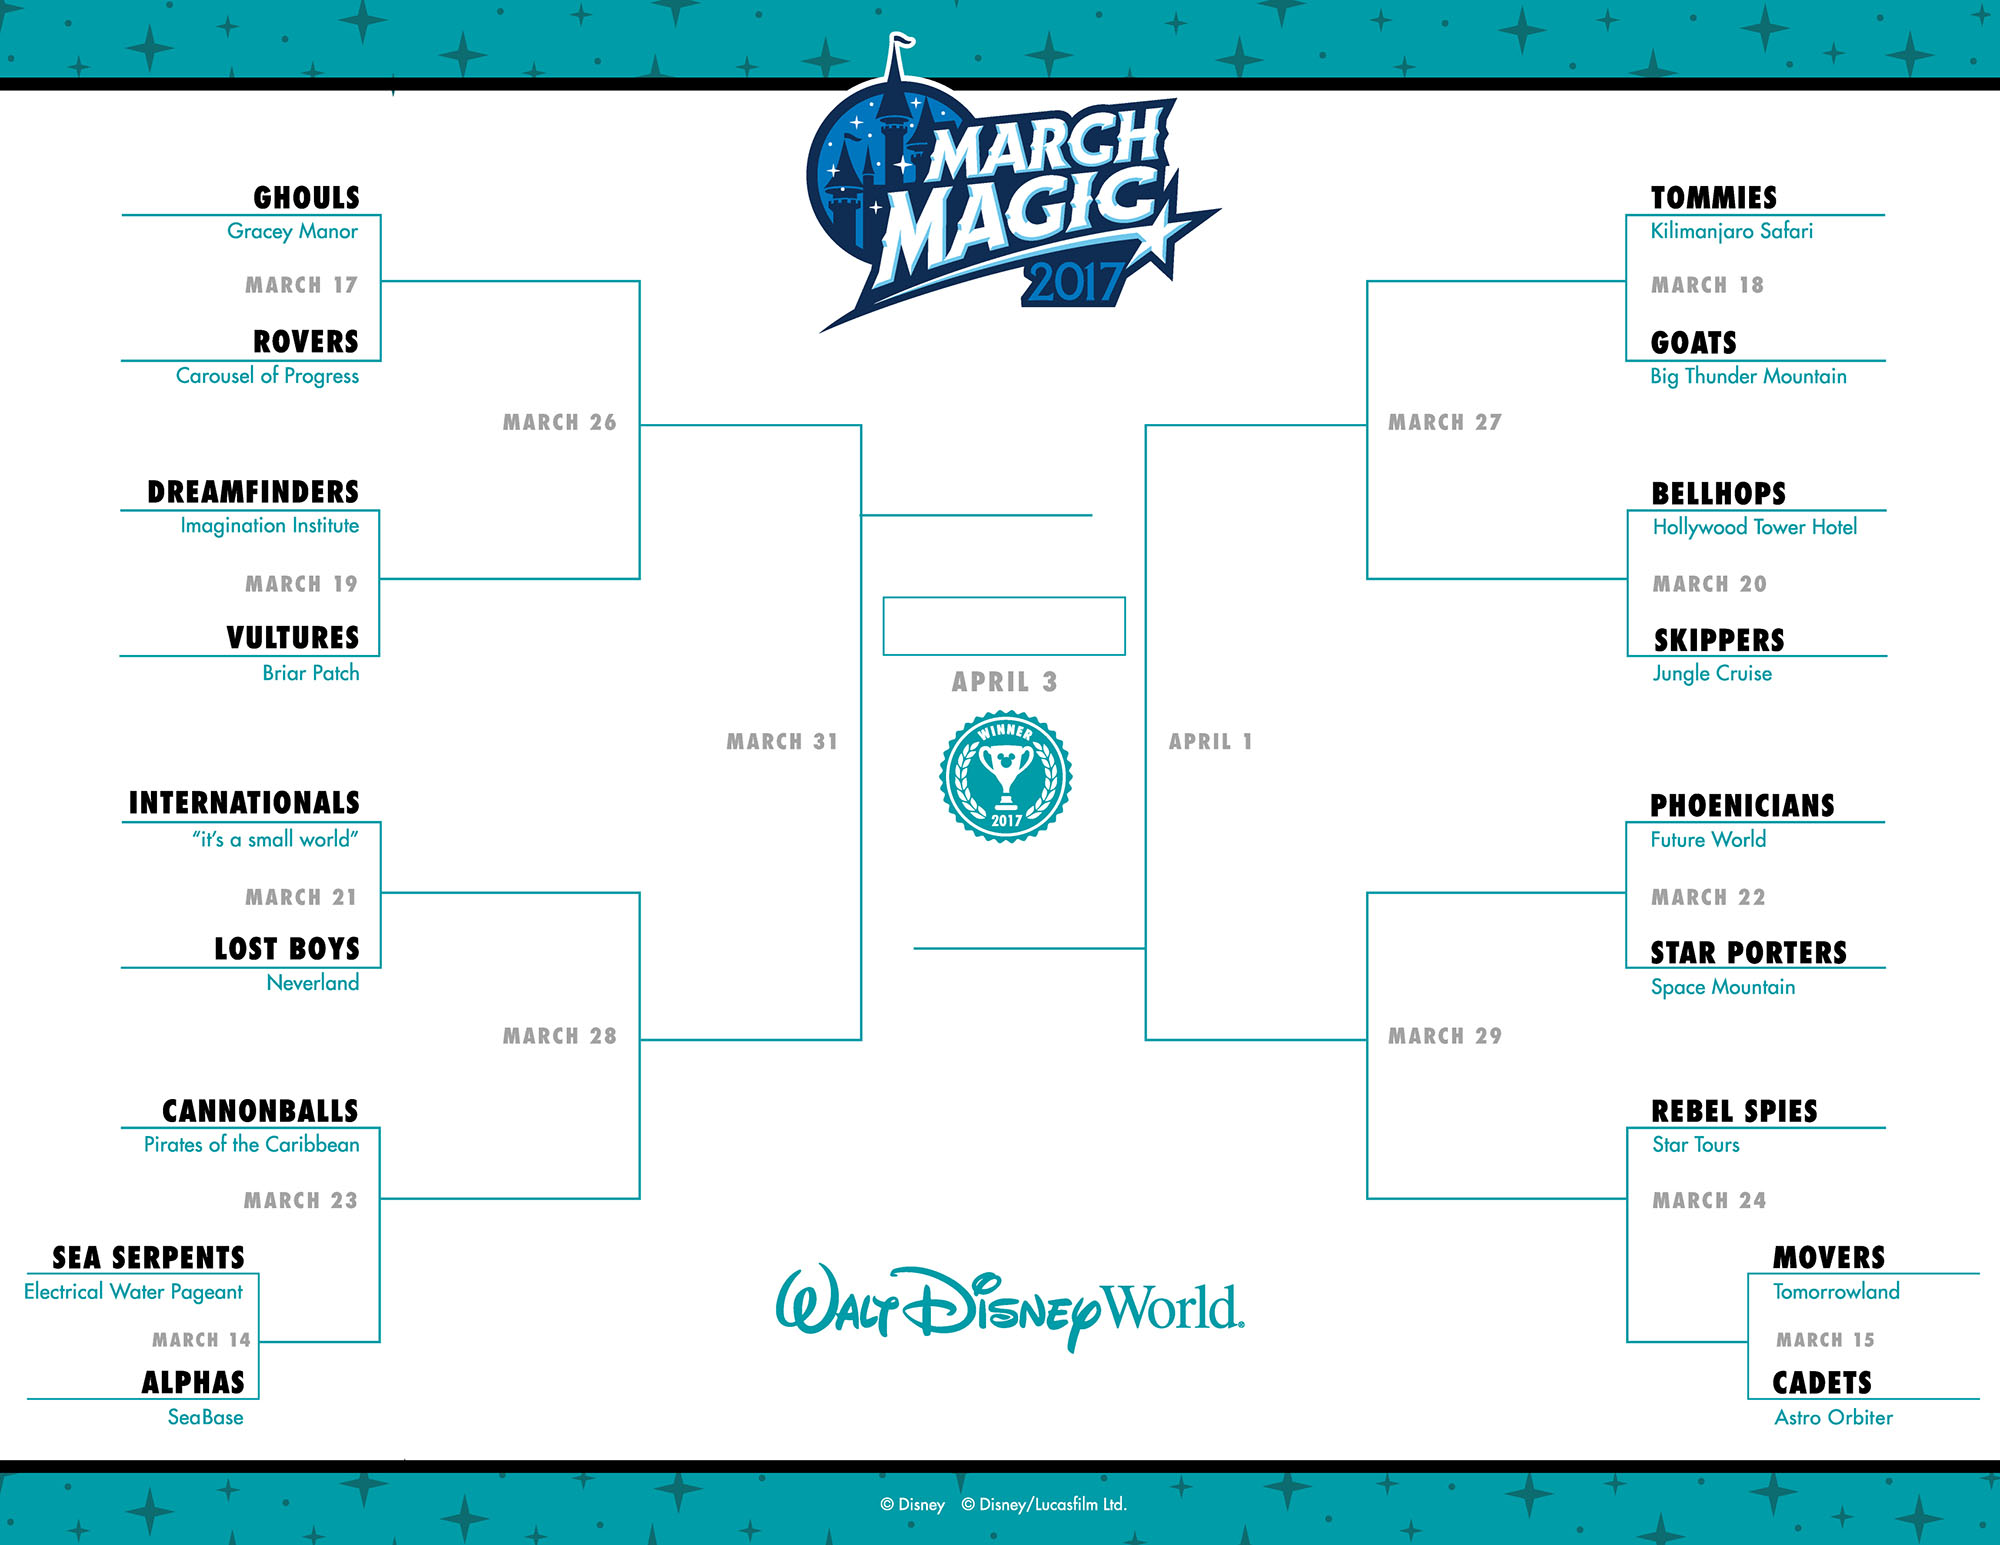 Disney's March Magic